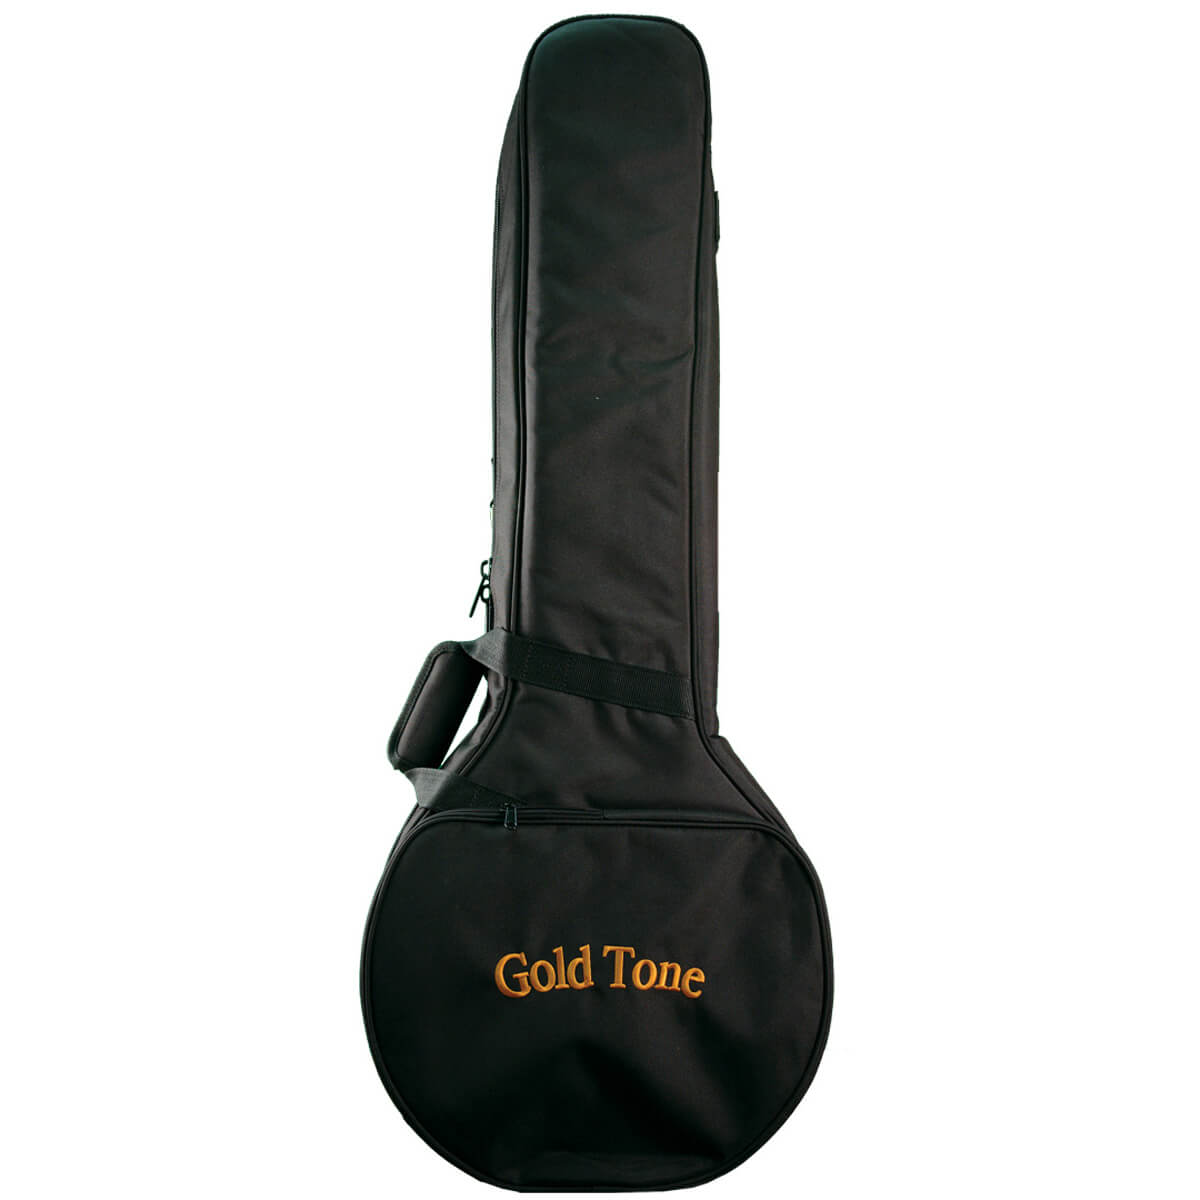 Gold Tone Banjitar, BT-1000 Banjos Gold Tone   